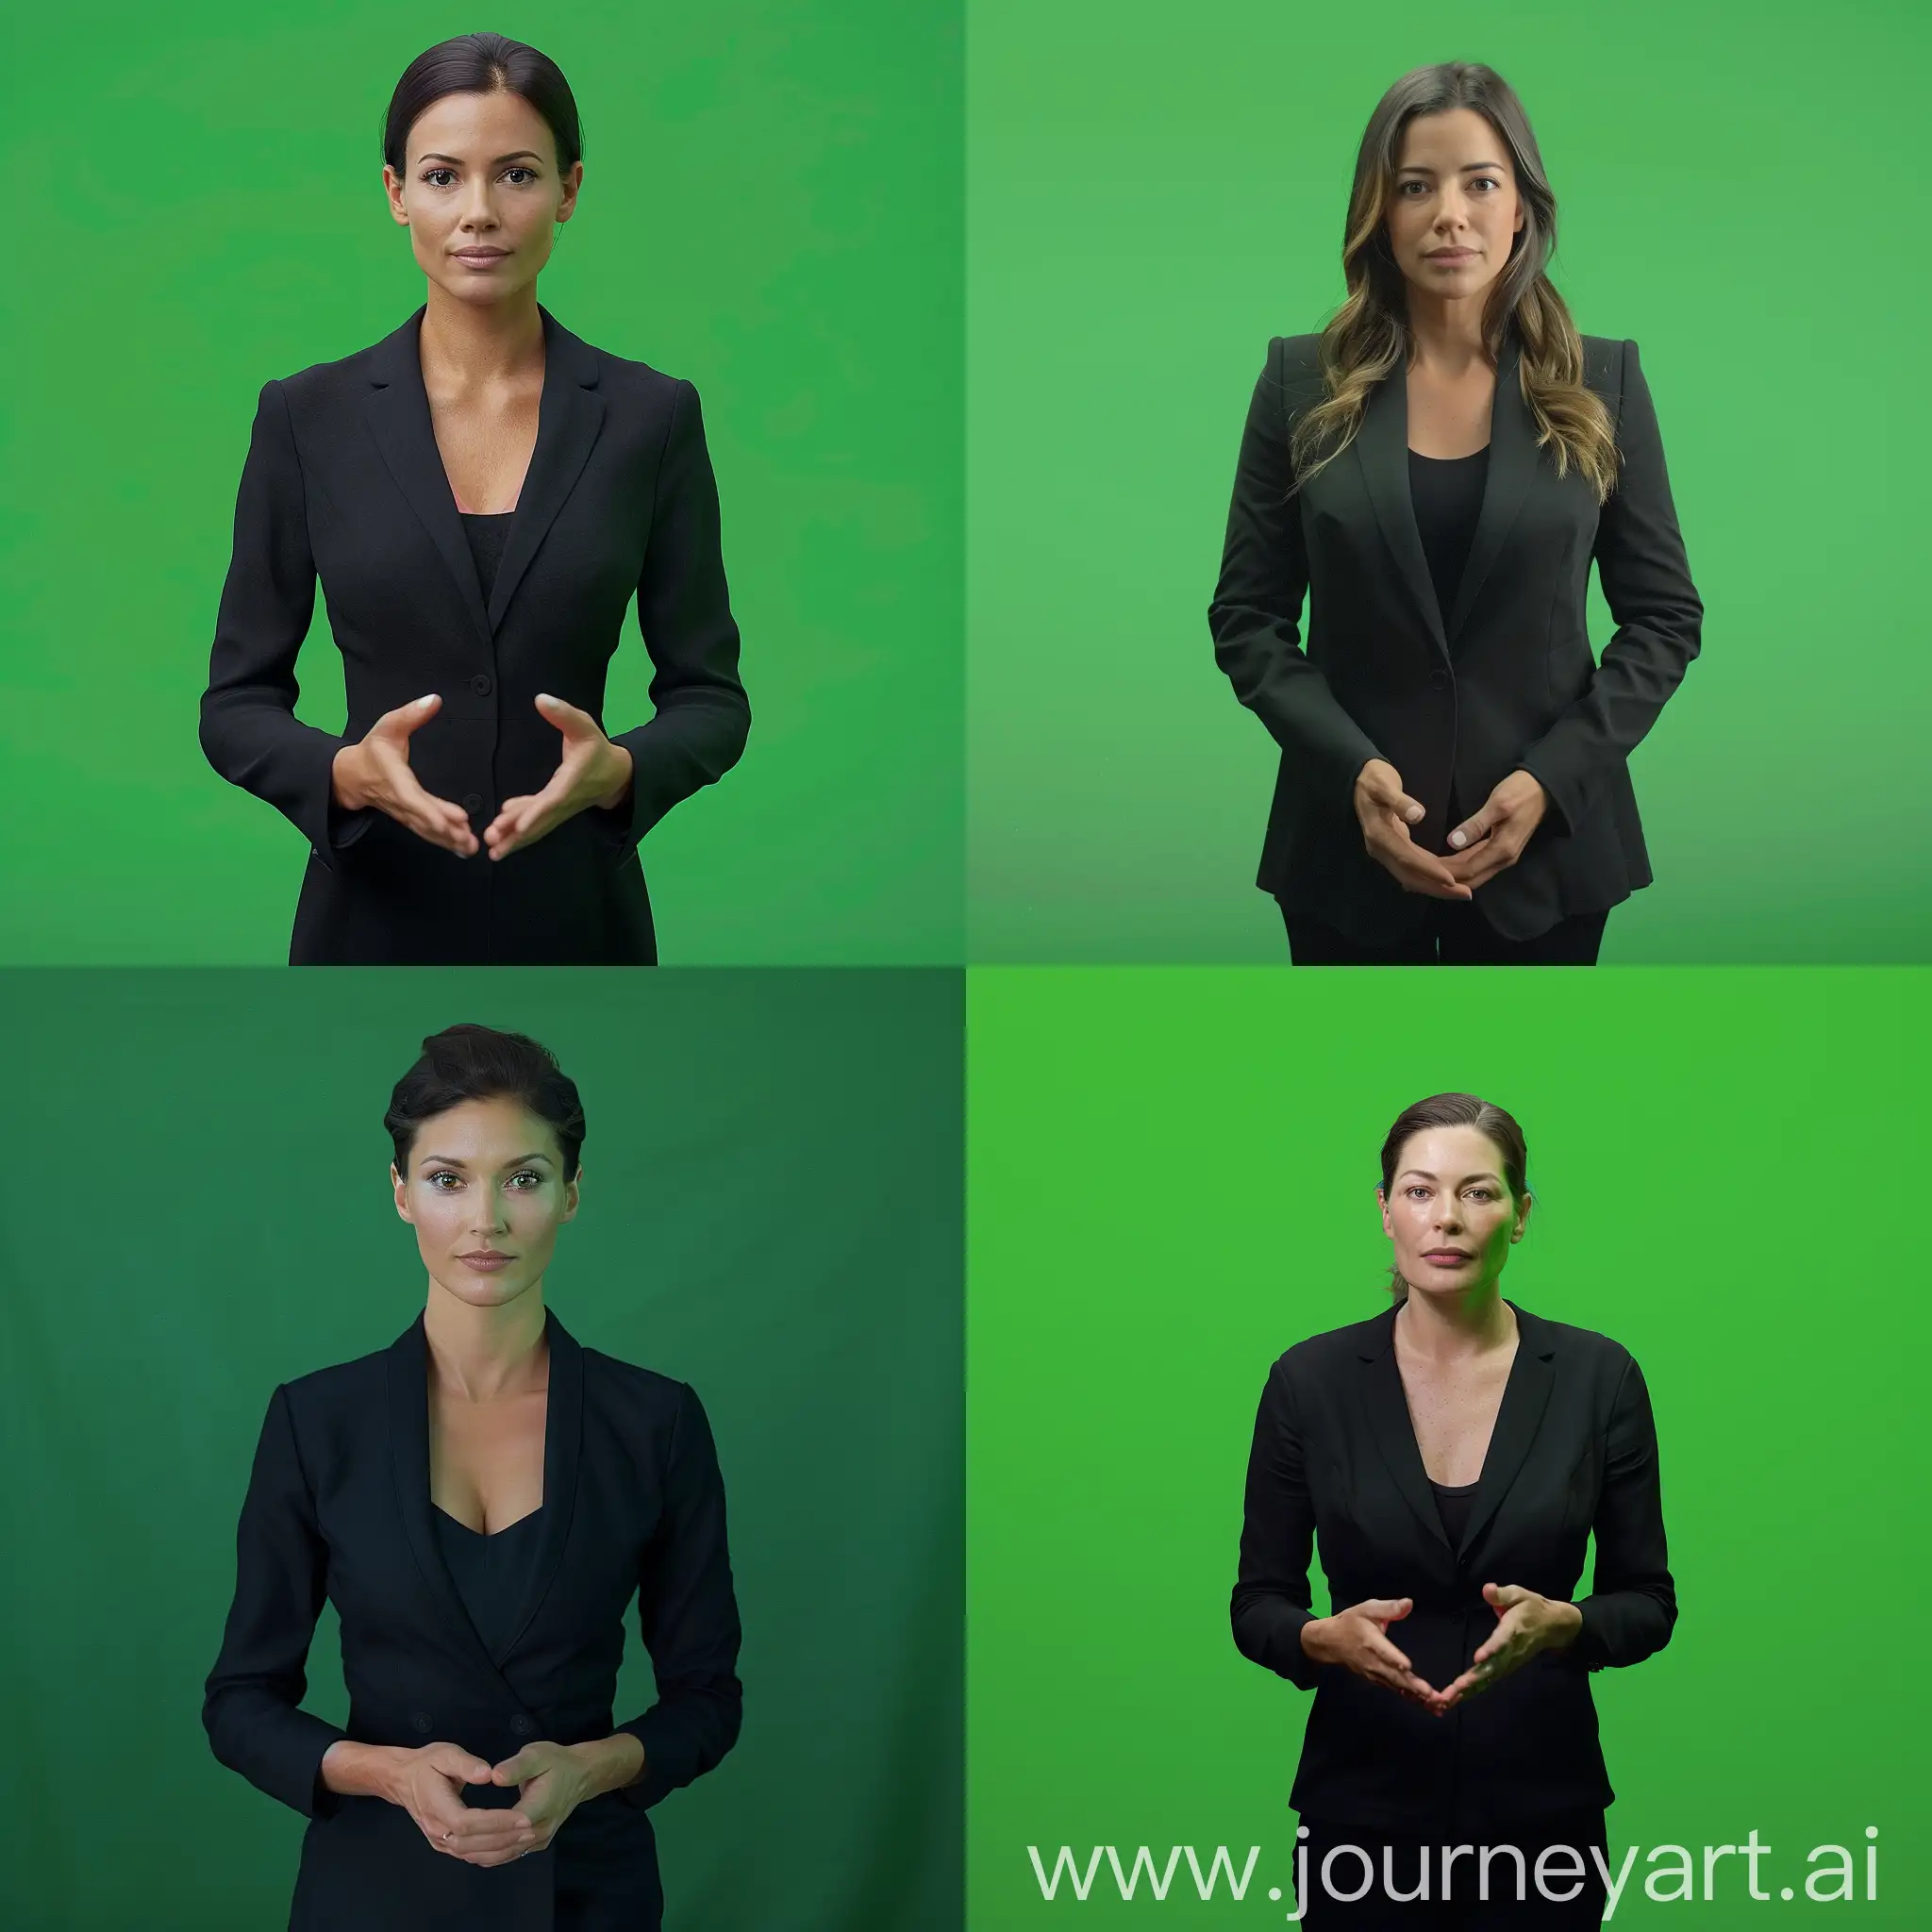 Professional-Female-News-Presenter-Portrait-in-Vibrant-Green-Chroma-Key-Background